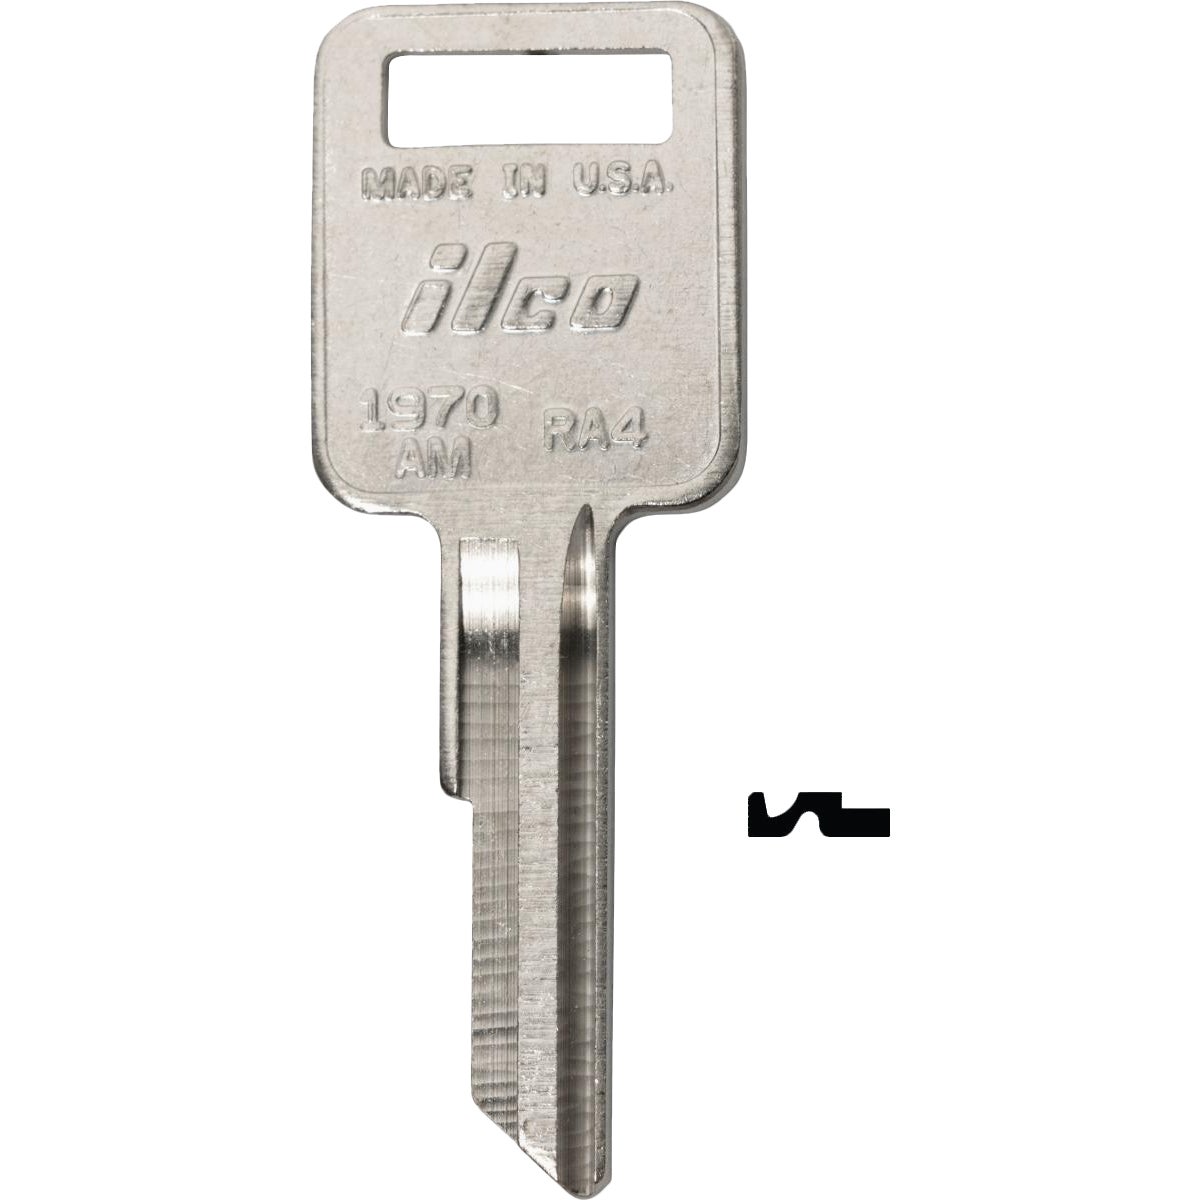 ILCO AMC Nickel Plated Automotive Key RA4 / 1970AM (10-Pack)